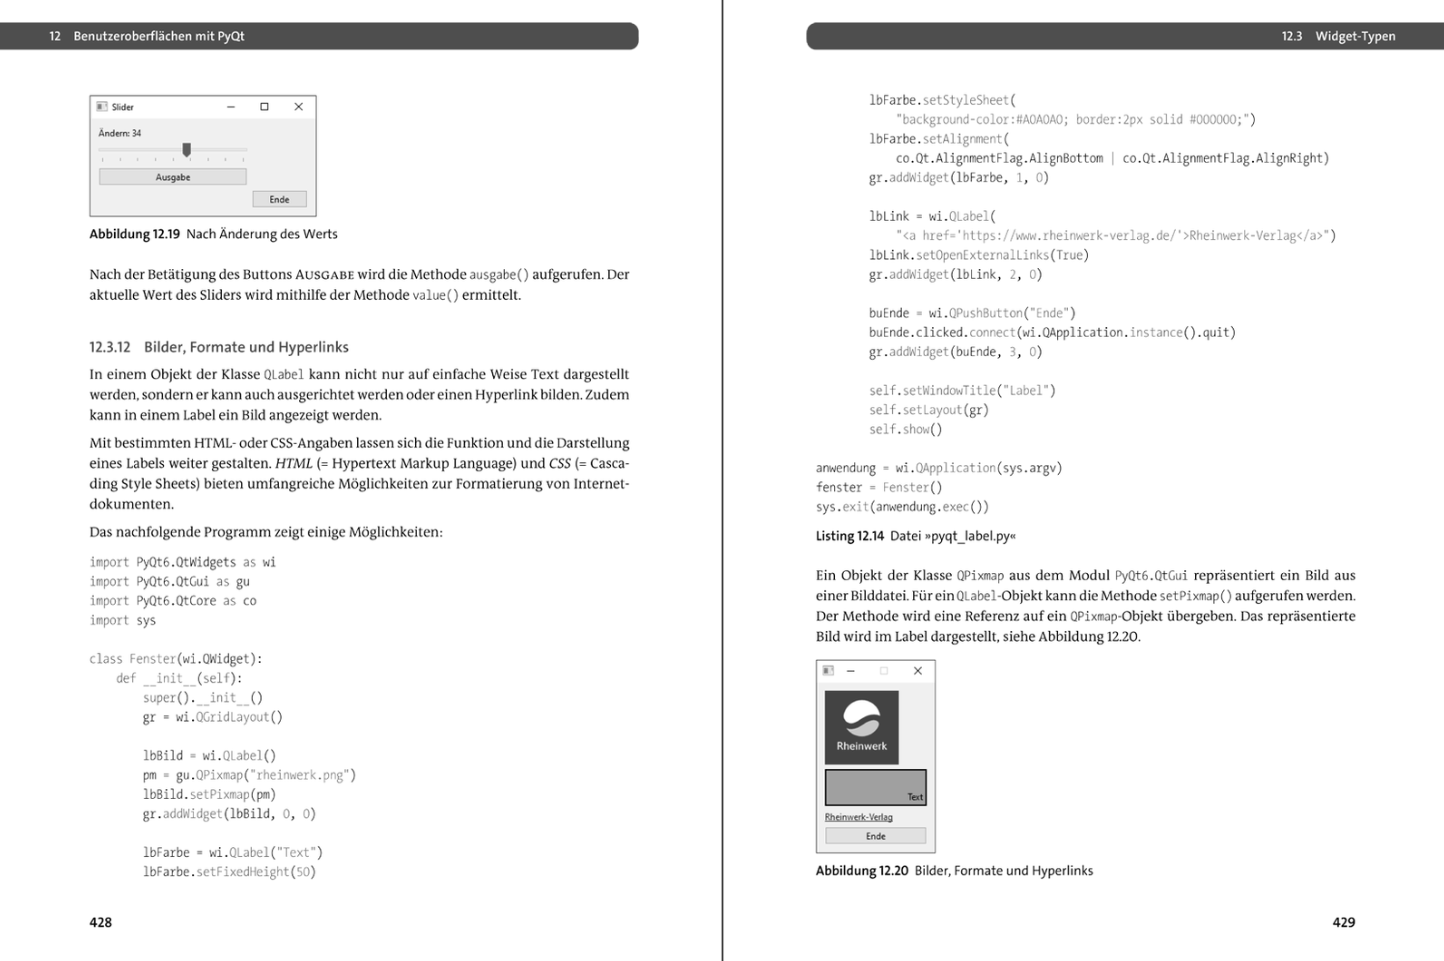 Superbundle c't Python 2022 (Heft + PDF + Buch)